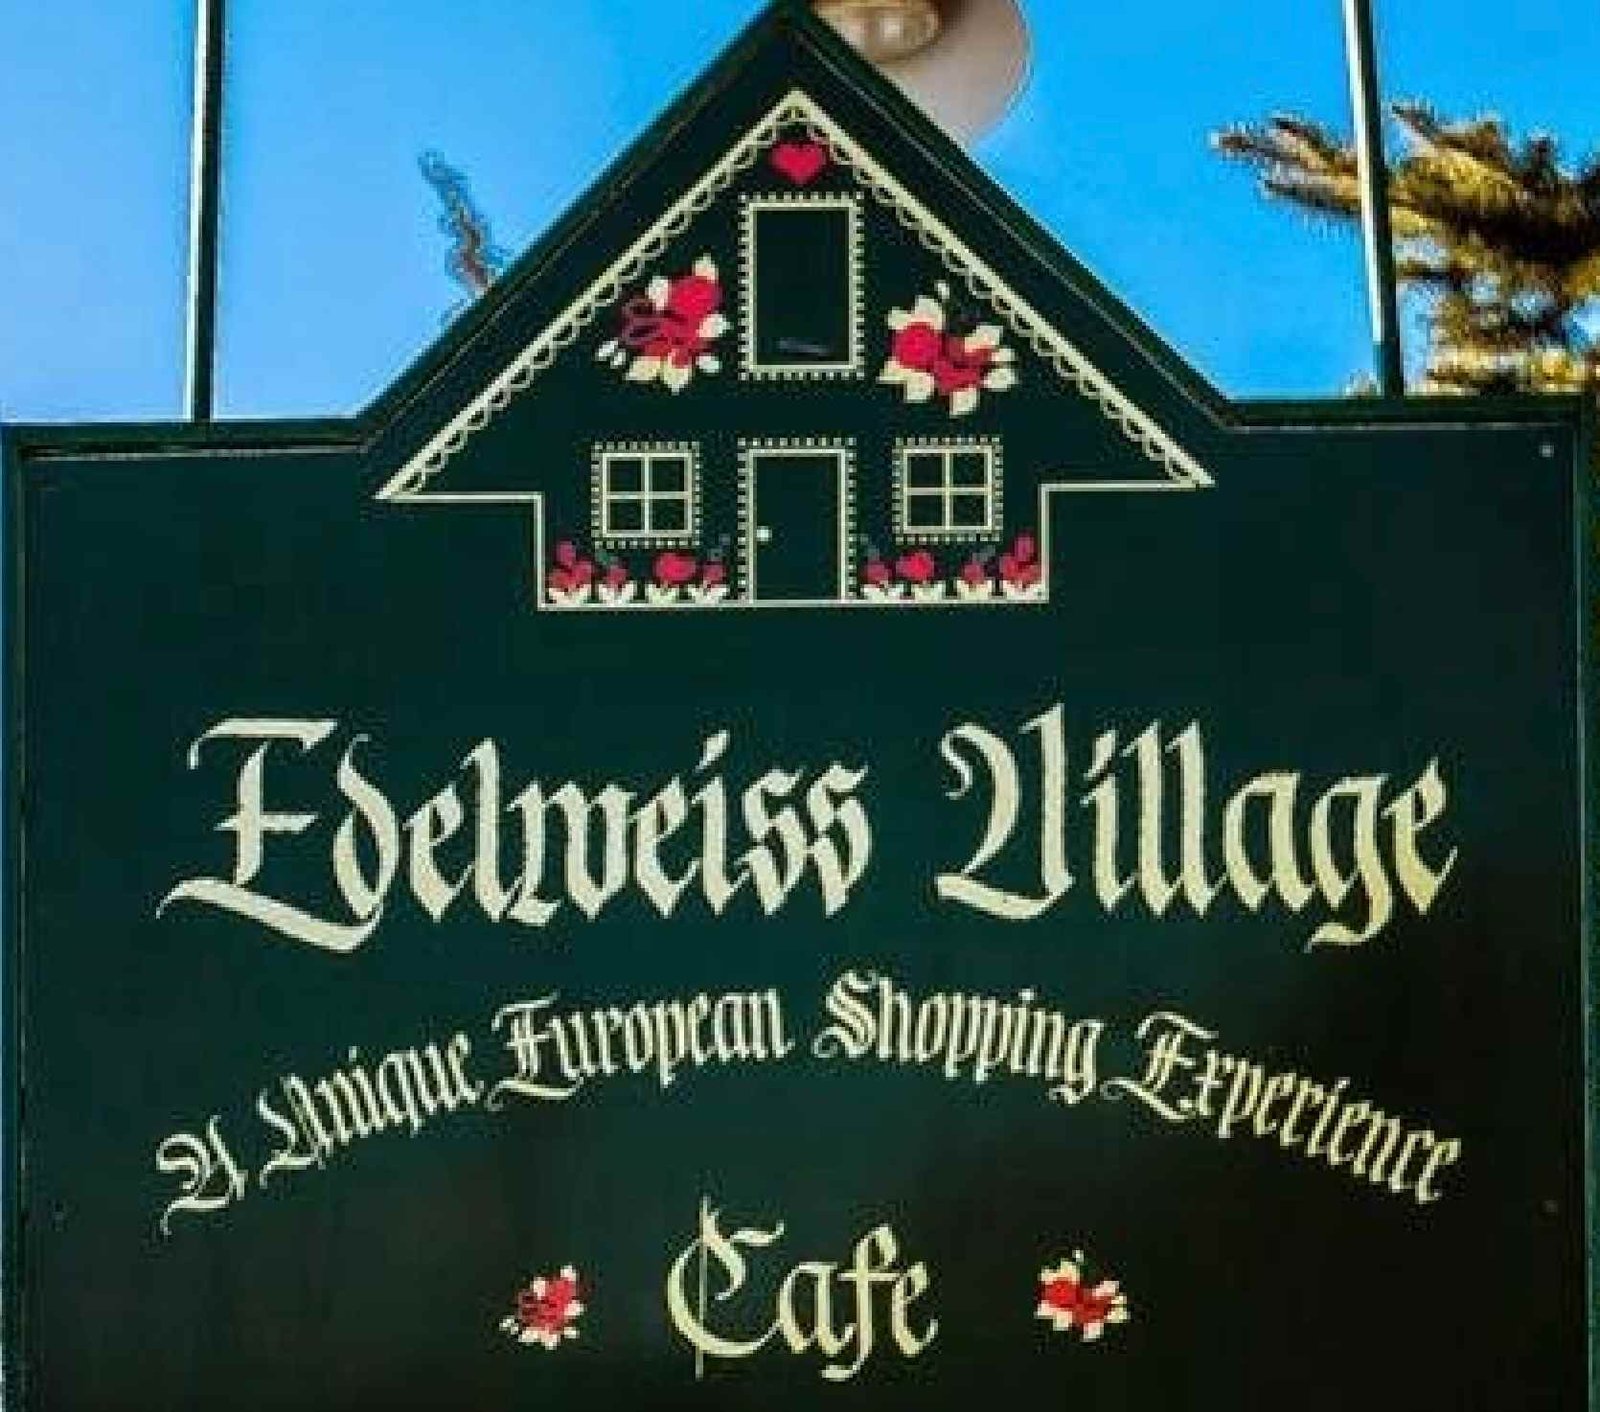 Edelweiss Village